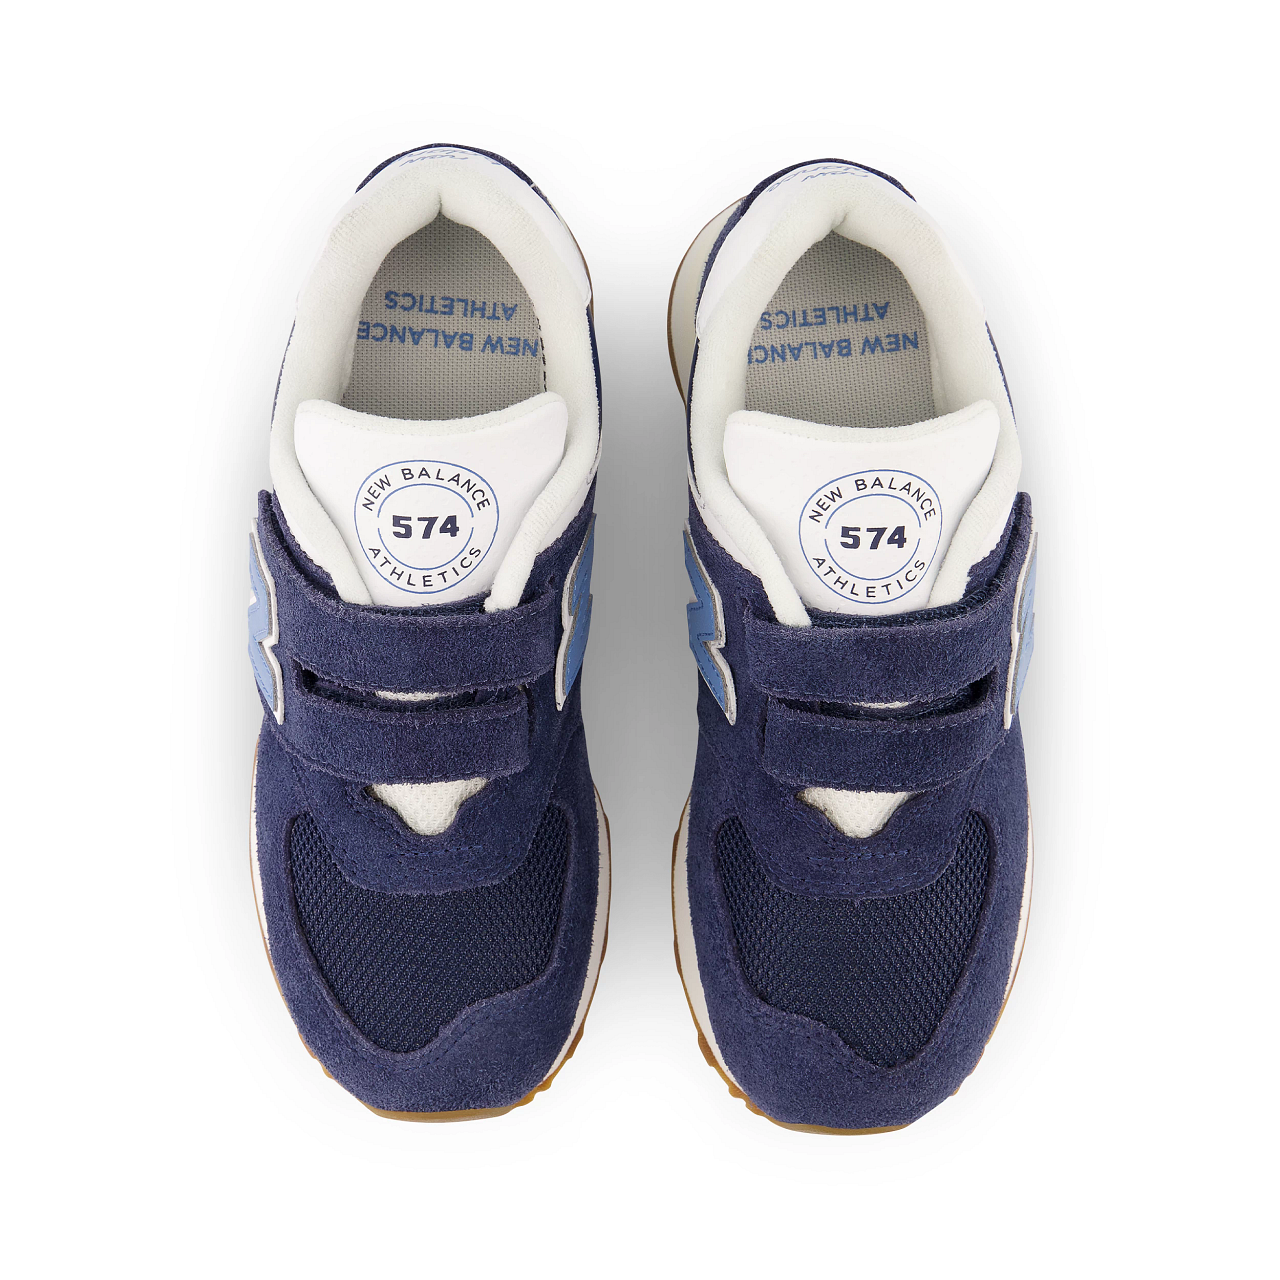 New Balance 574 Sneaker Navy/Heritage Blue